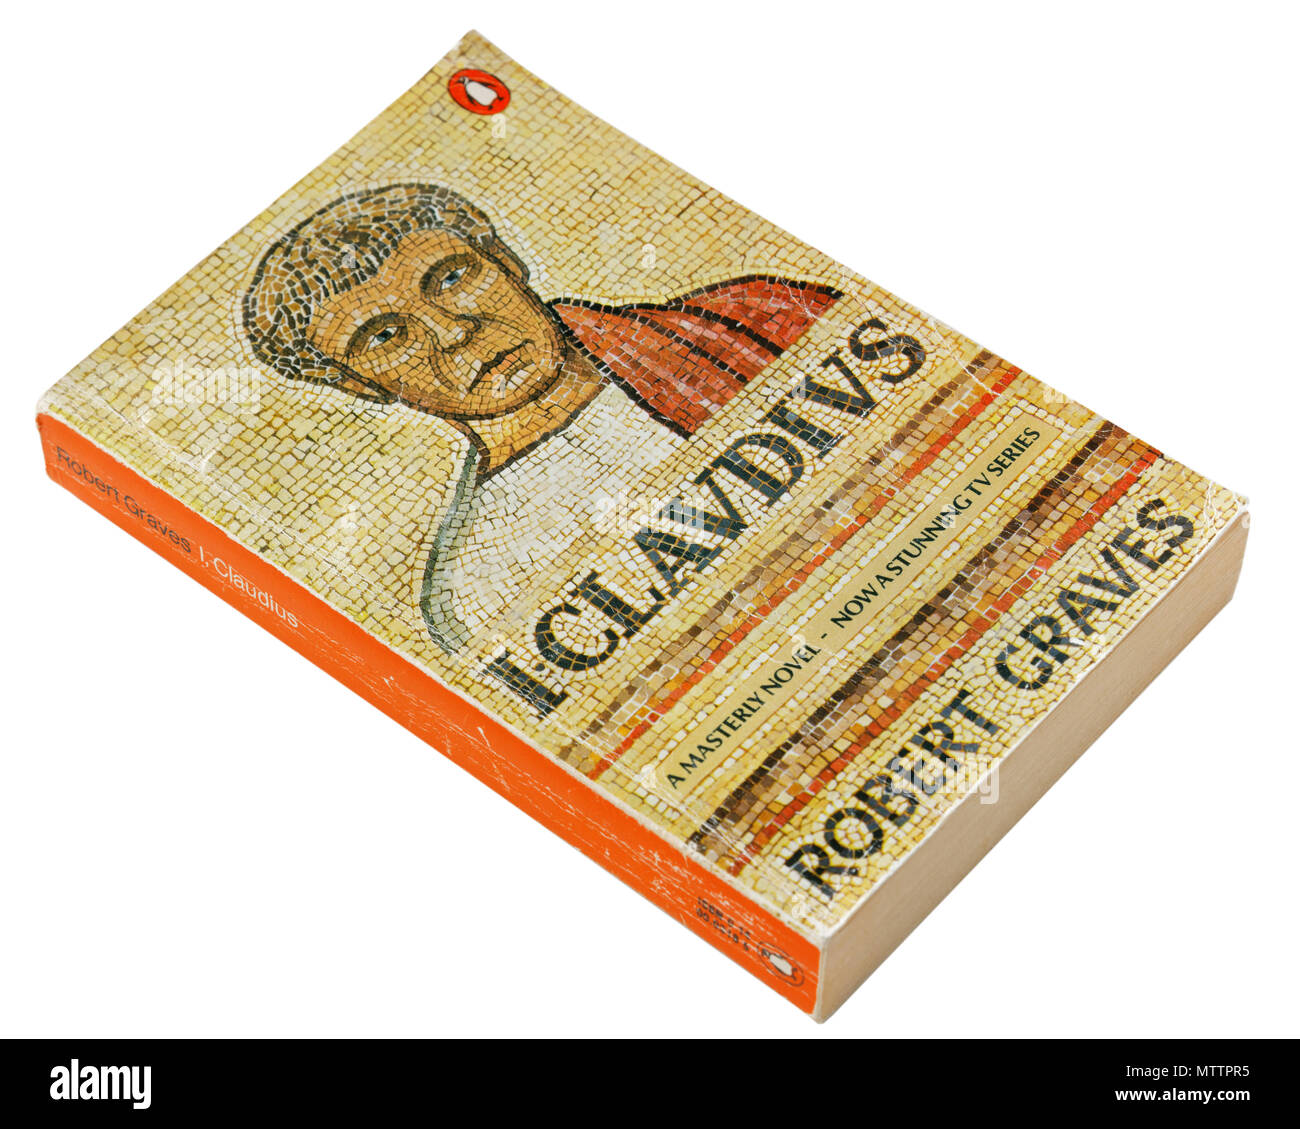 I Claudius by Robert Graves Stock Photo